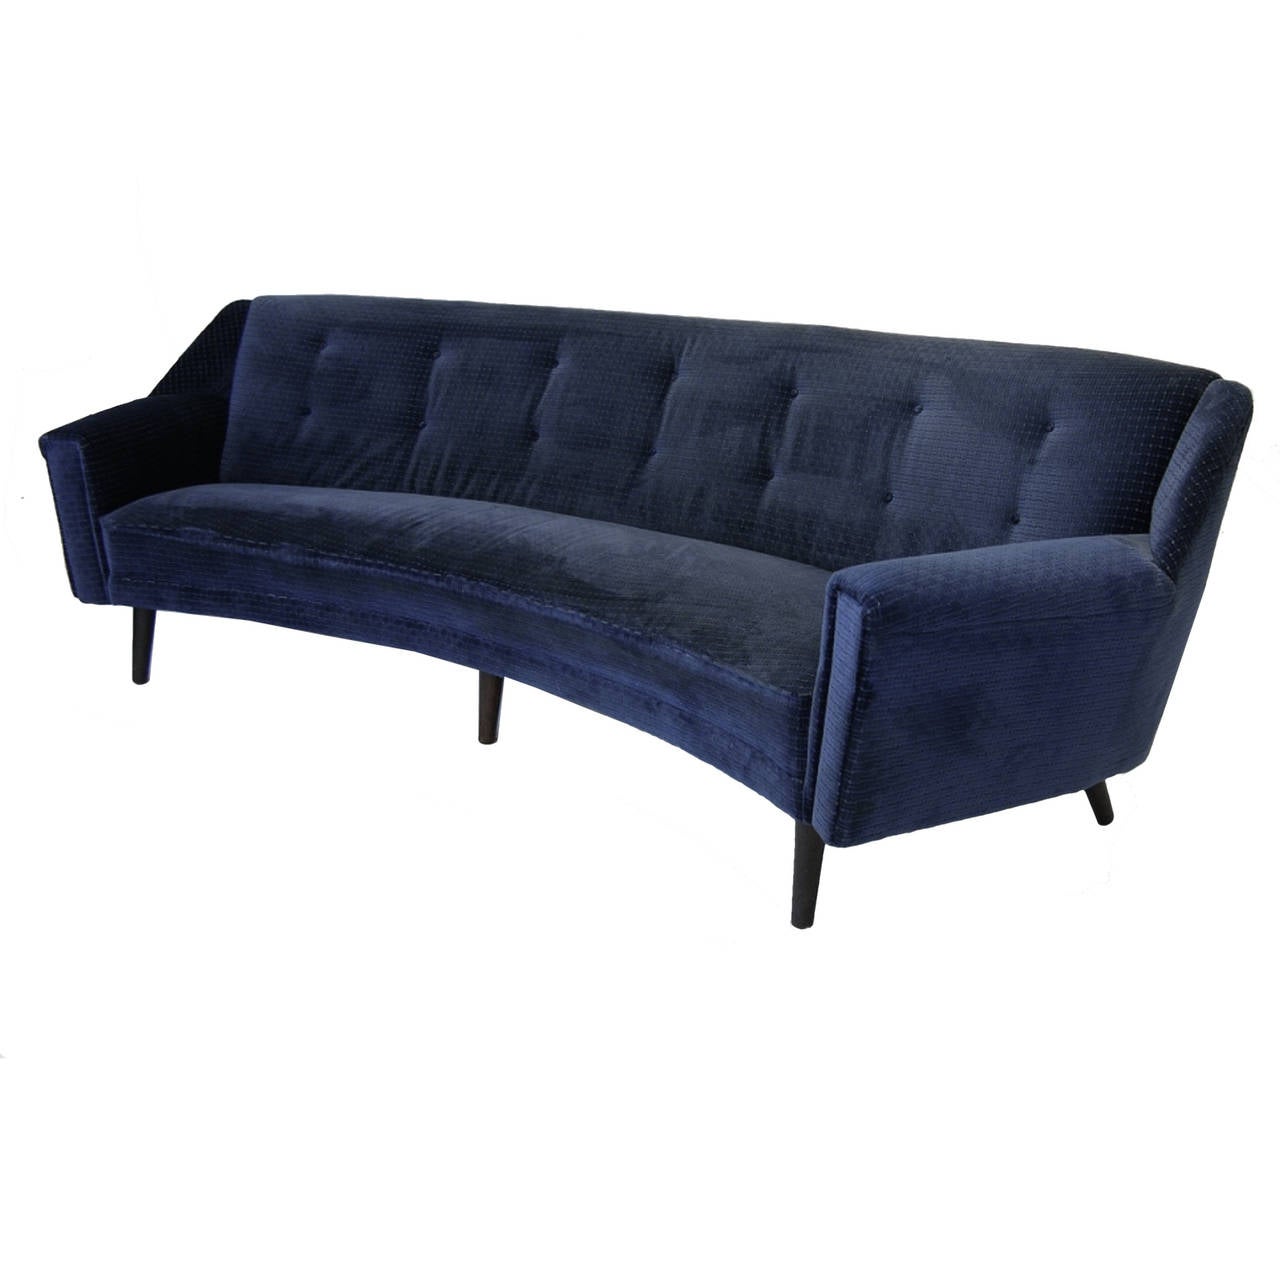 A very rare sleek and elegant Kurt Ostervig sofa from Denmark.